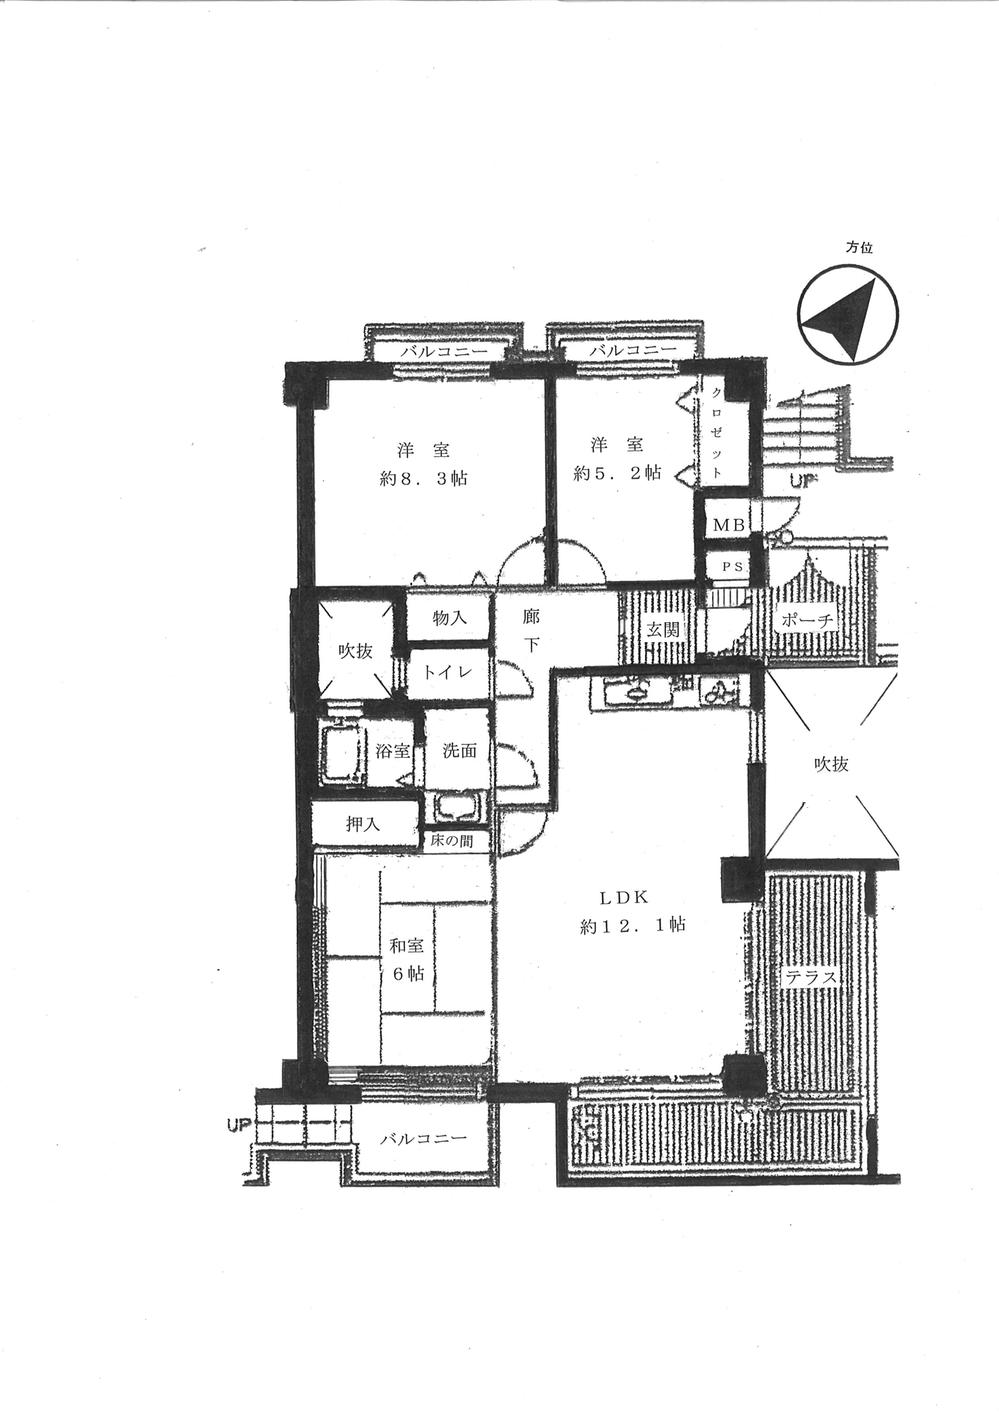 Floor plan. 3LDK, Price 15.8 million yen, Occupied area 79.74 sq m , Balcony area 7.65 sq m